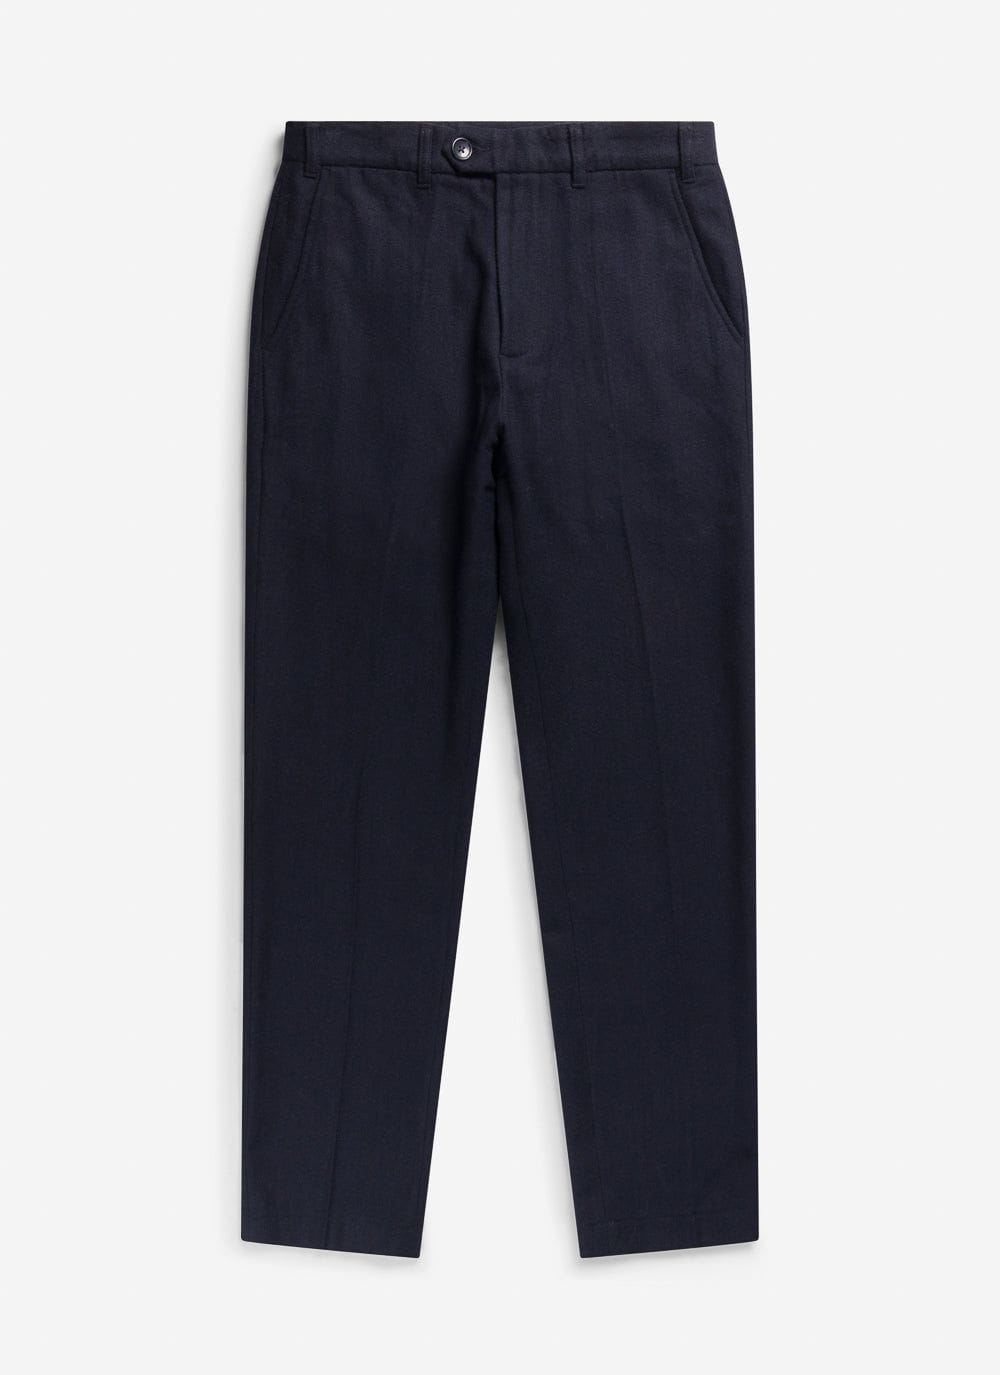 Men's Tailored Wool Trousers | Straight Leg | Navy Blue